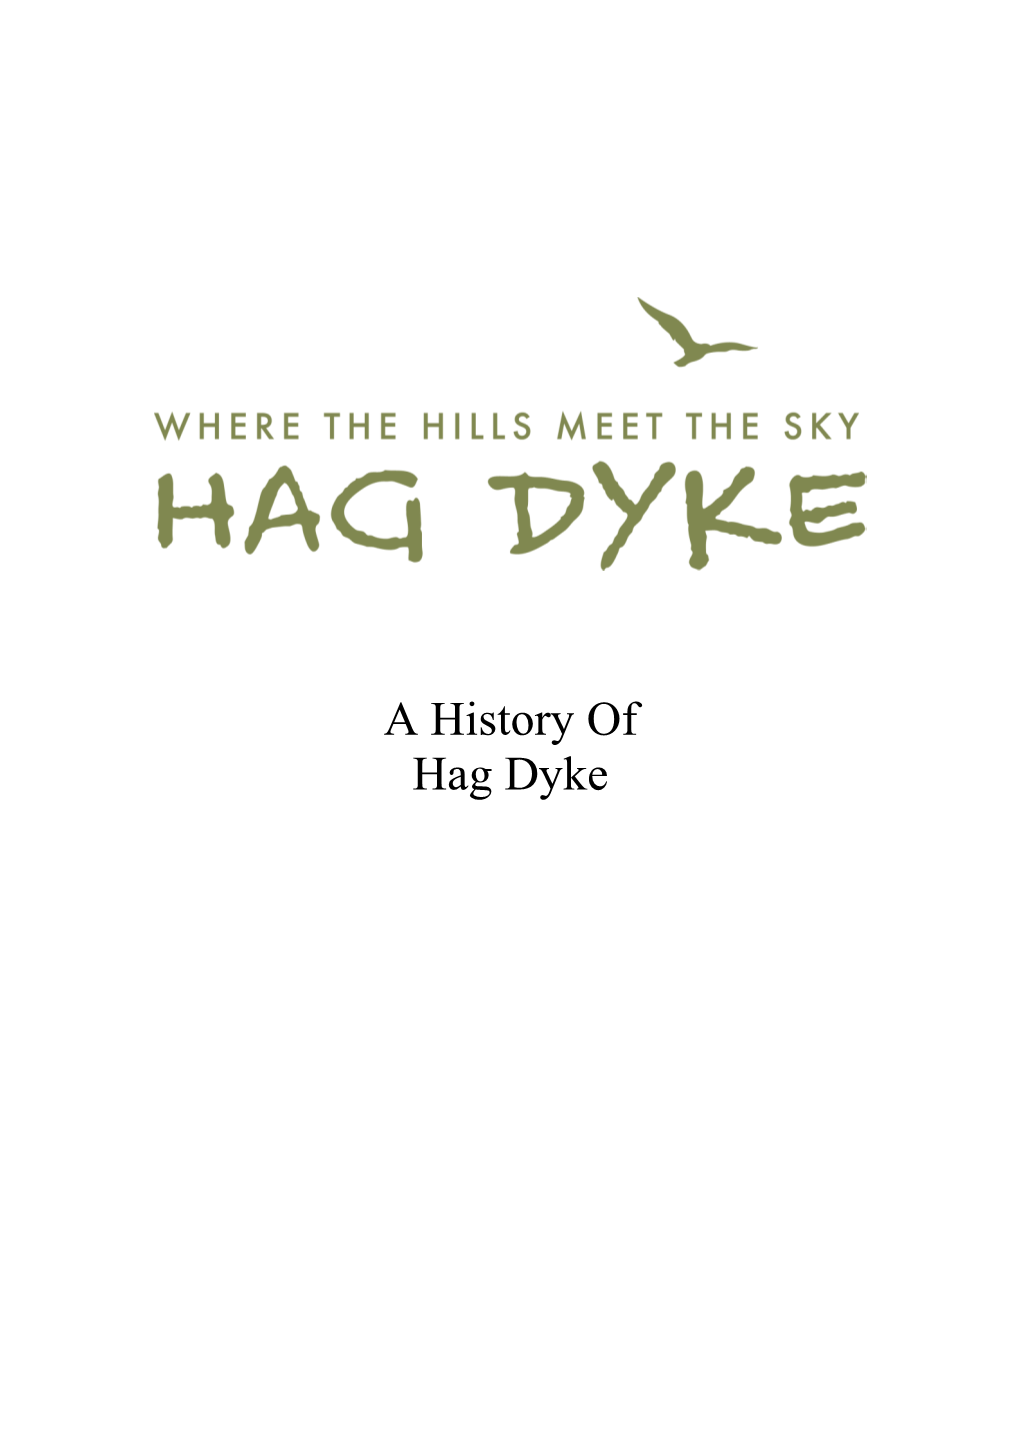 A History of Hag Dyke